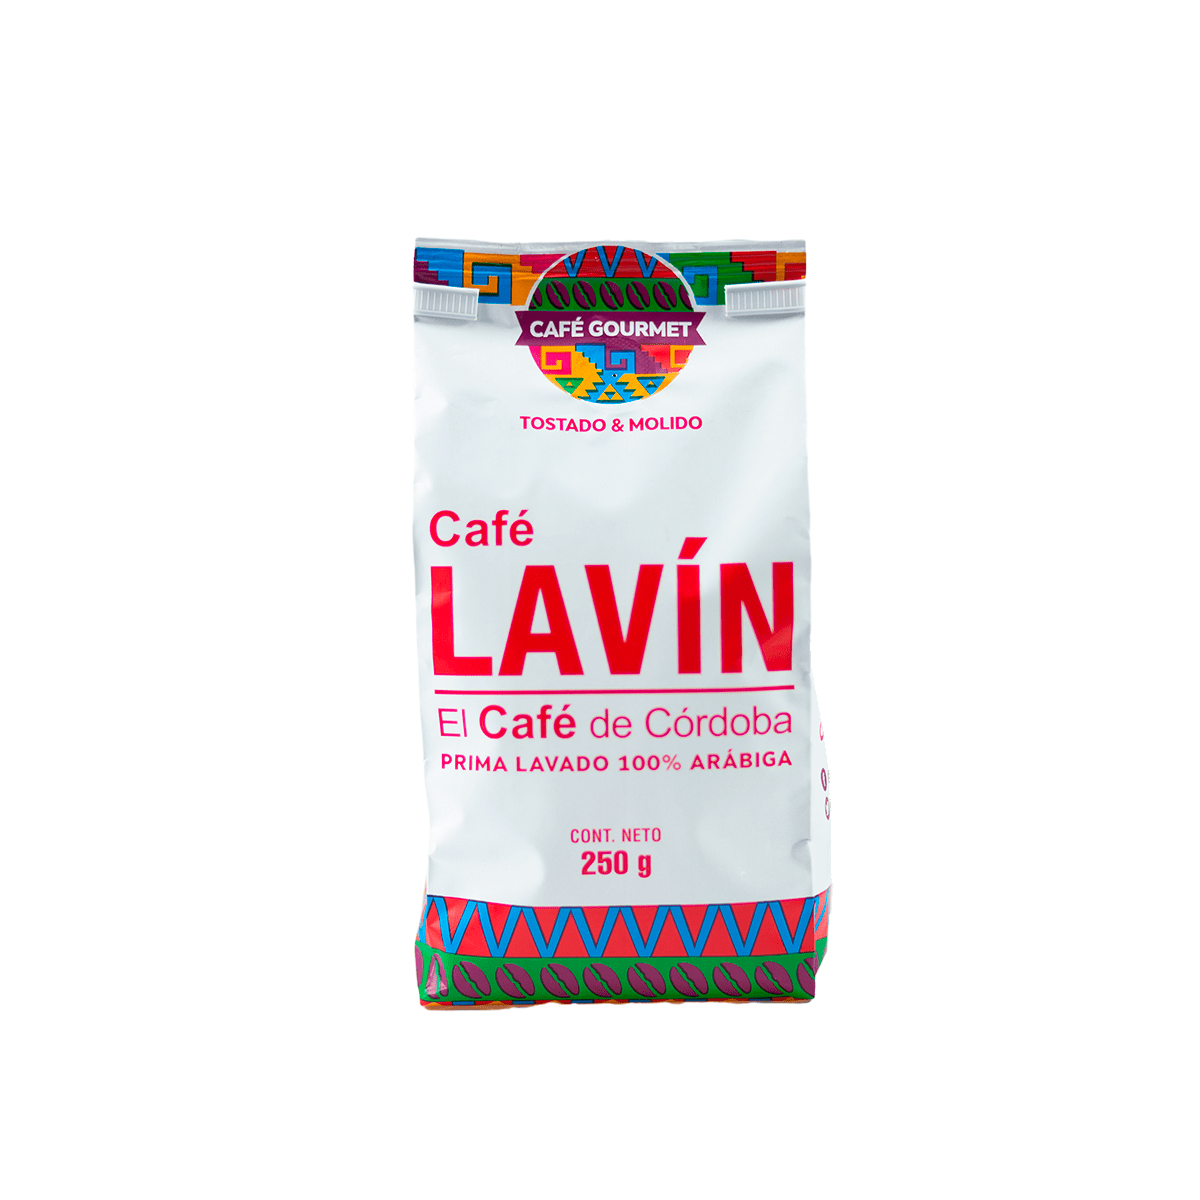 Bolsa de Café Lavín tostado y molido